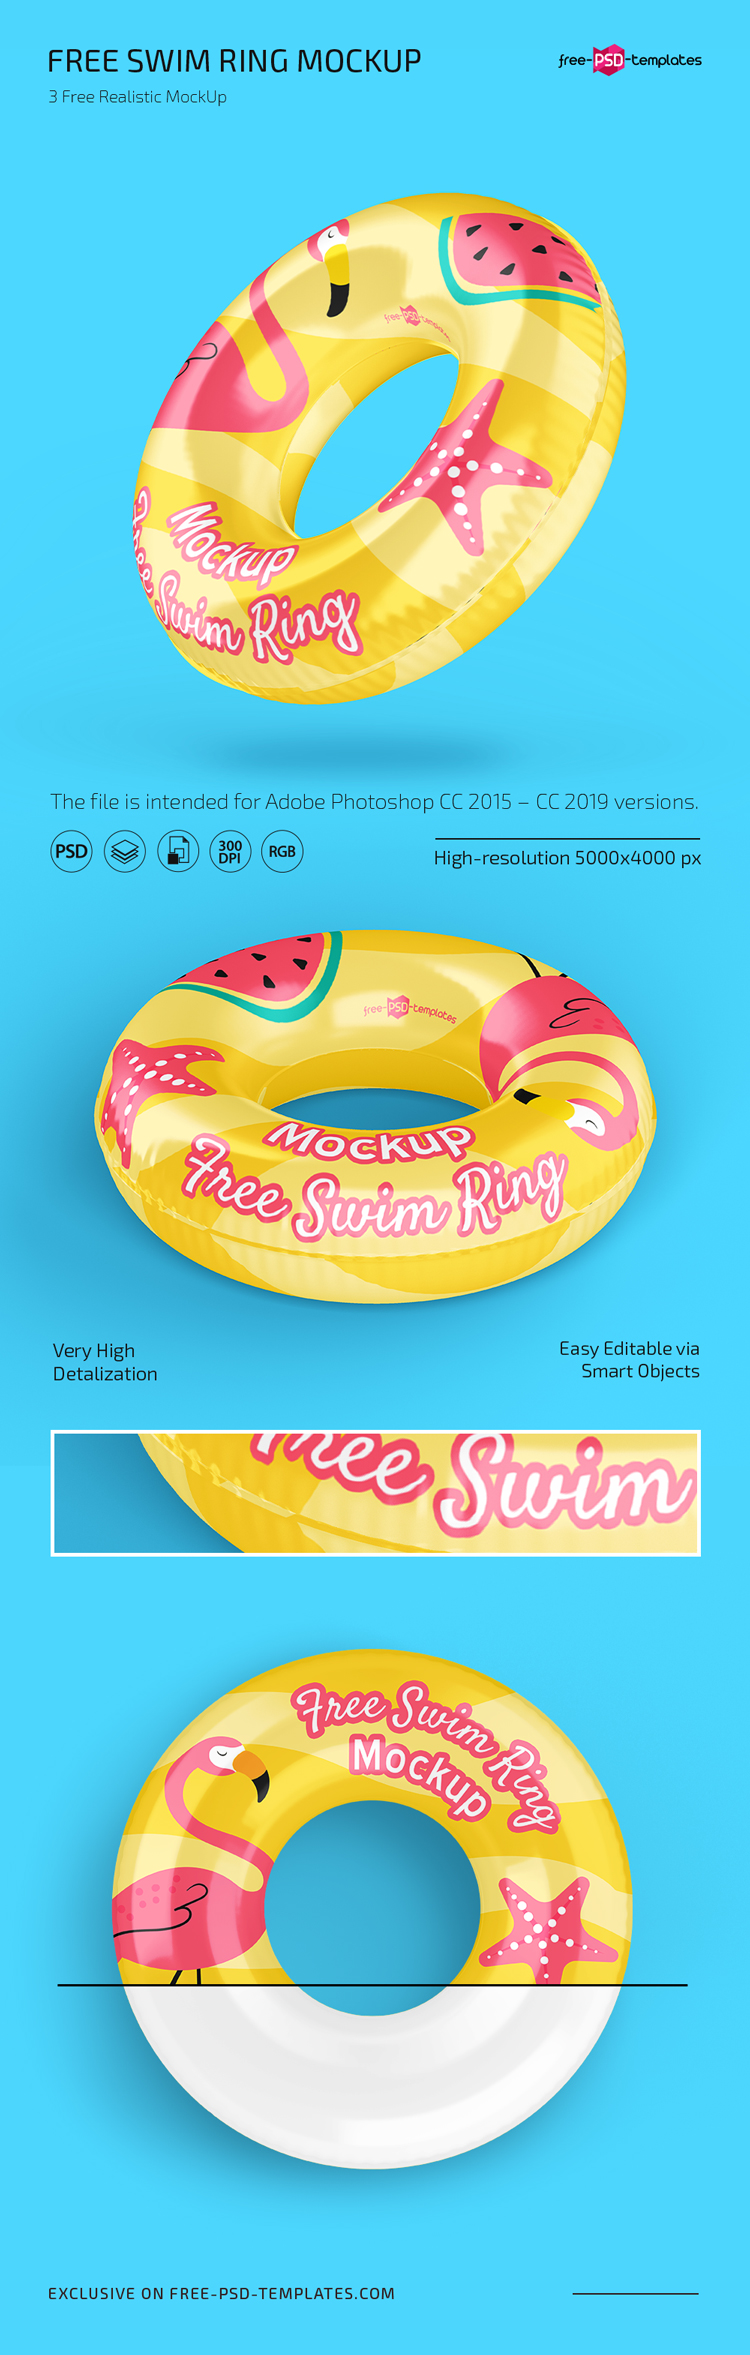 Free swim mockup information